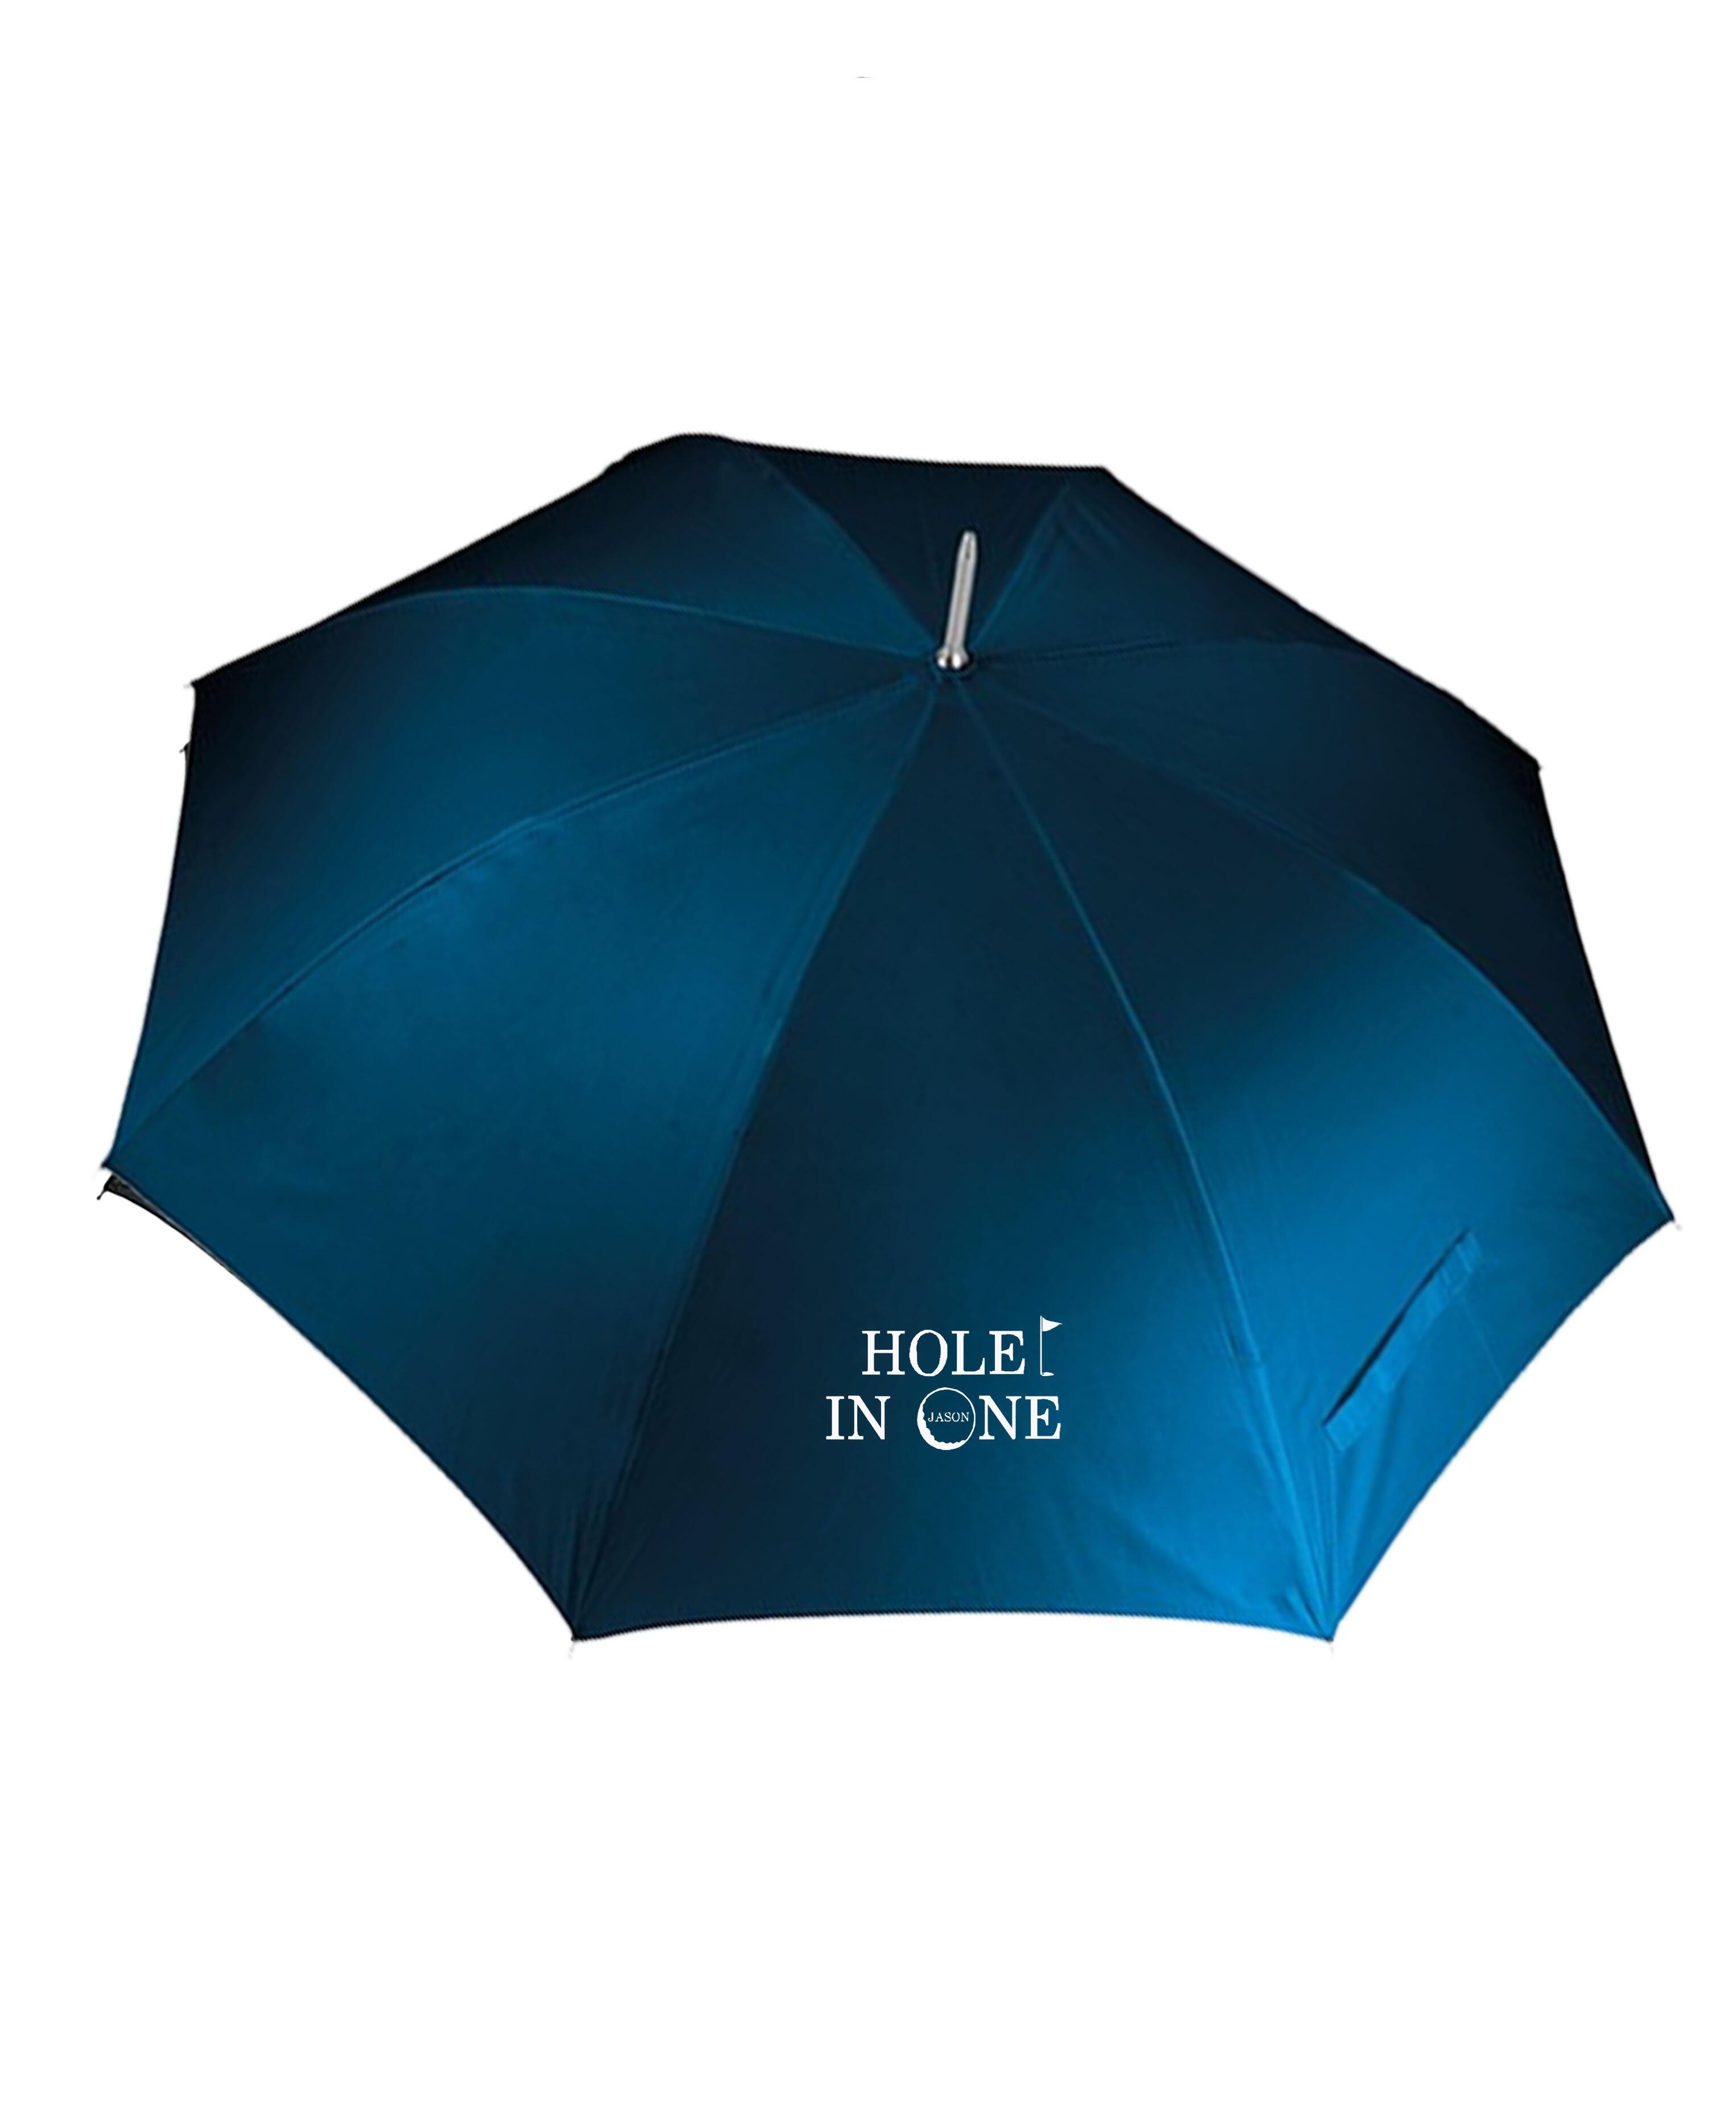 Hole in 1 Design X-Large Golf Umbrella Navy